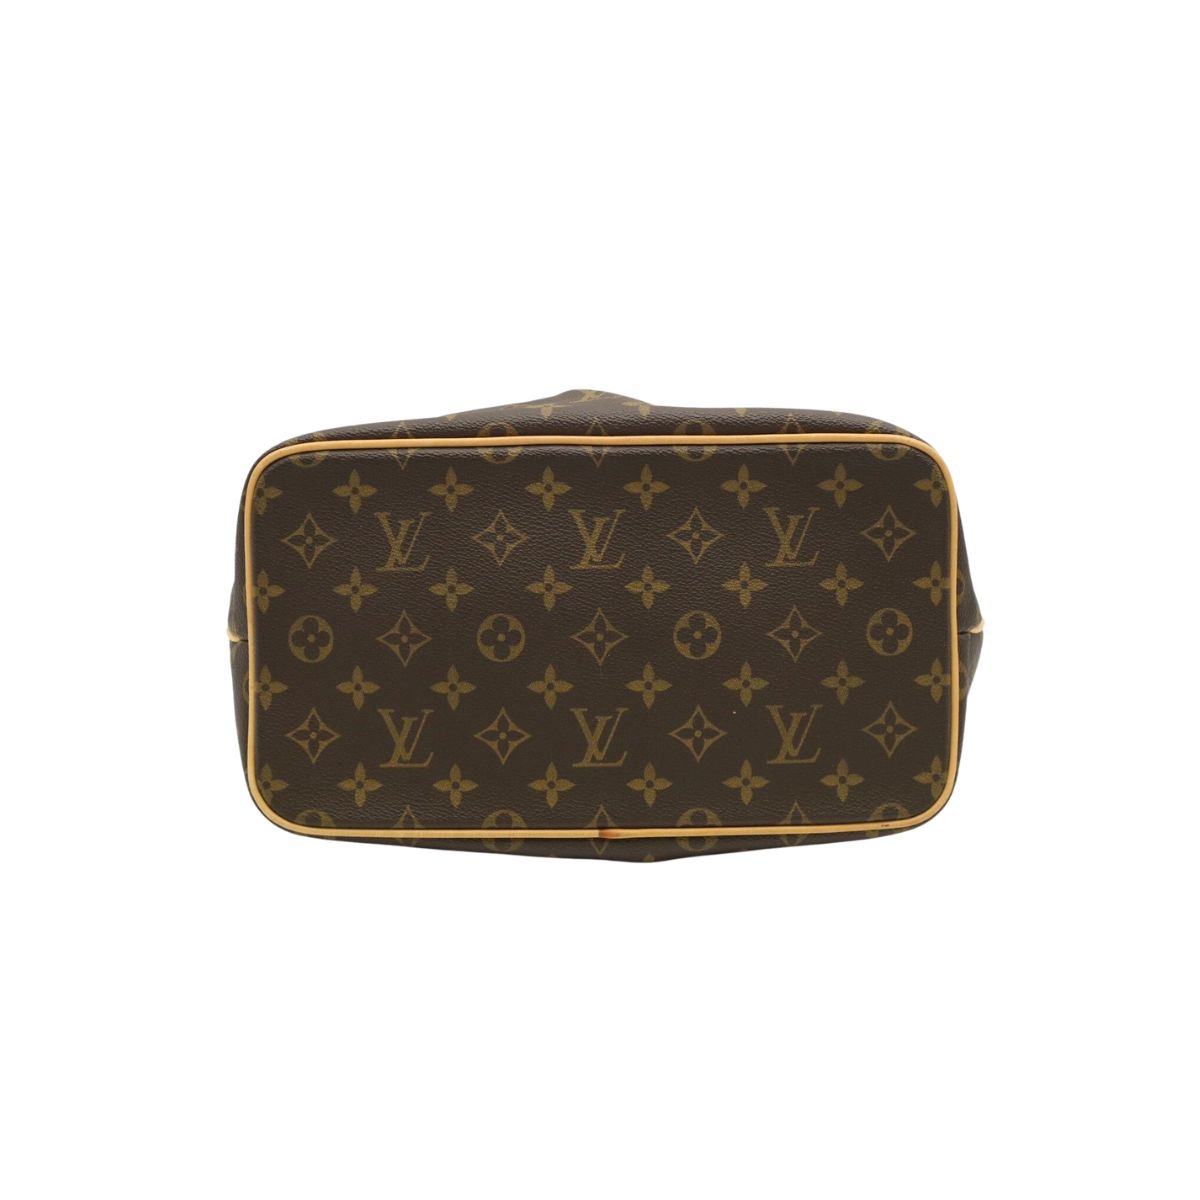 Louis Vuitton - Authenticated Artsy Handbag - Leather Brown Plain for Women, Good Condition